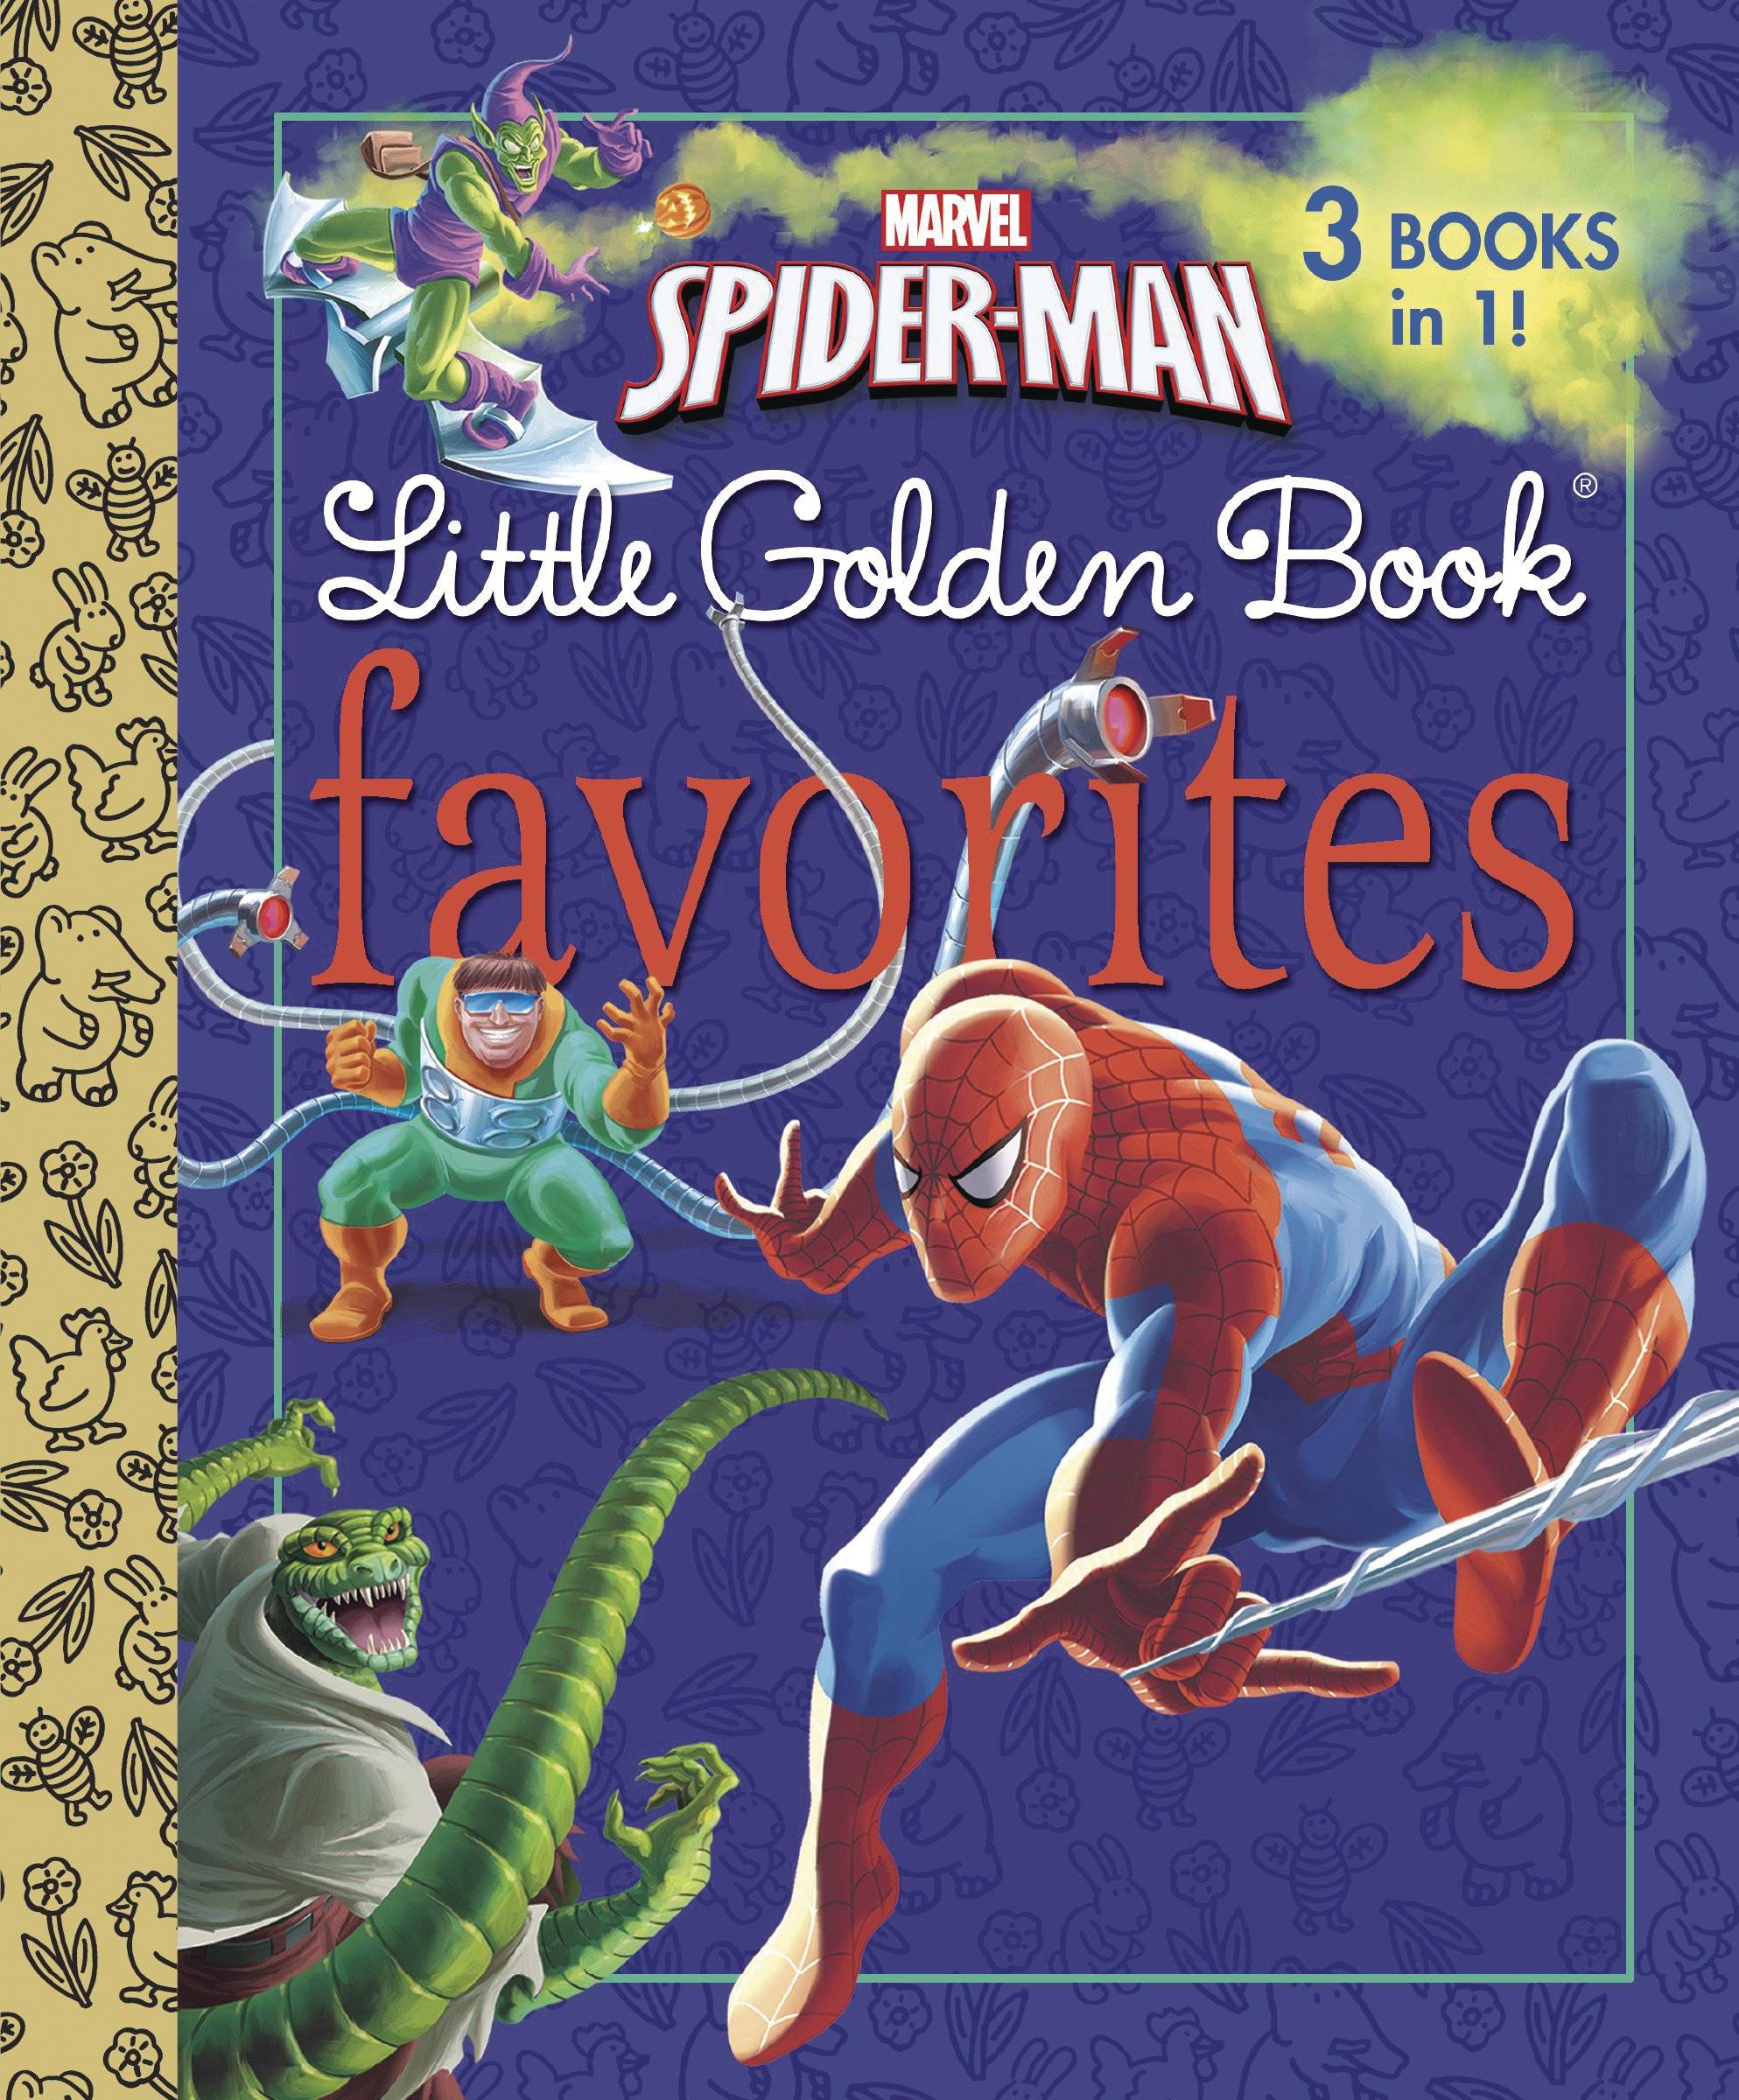 Spider-Man: Little Golden Book Favorites